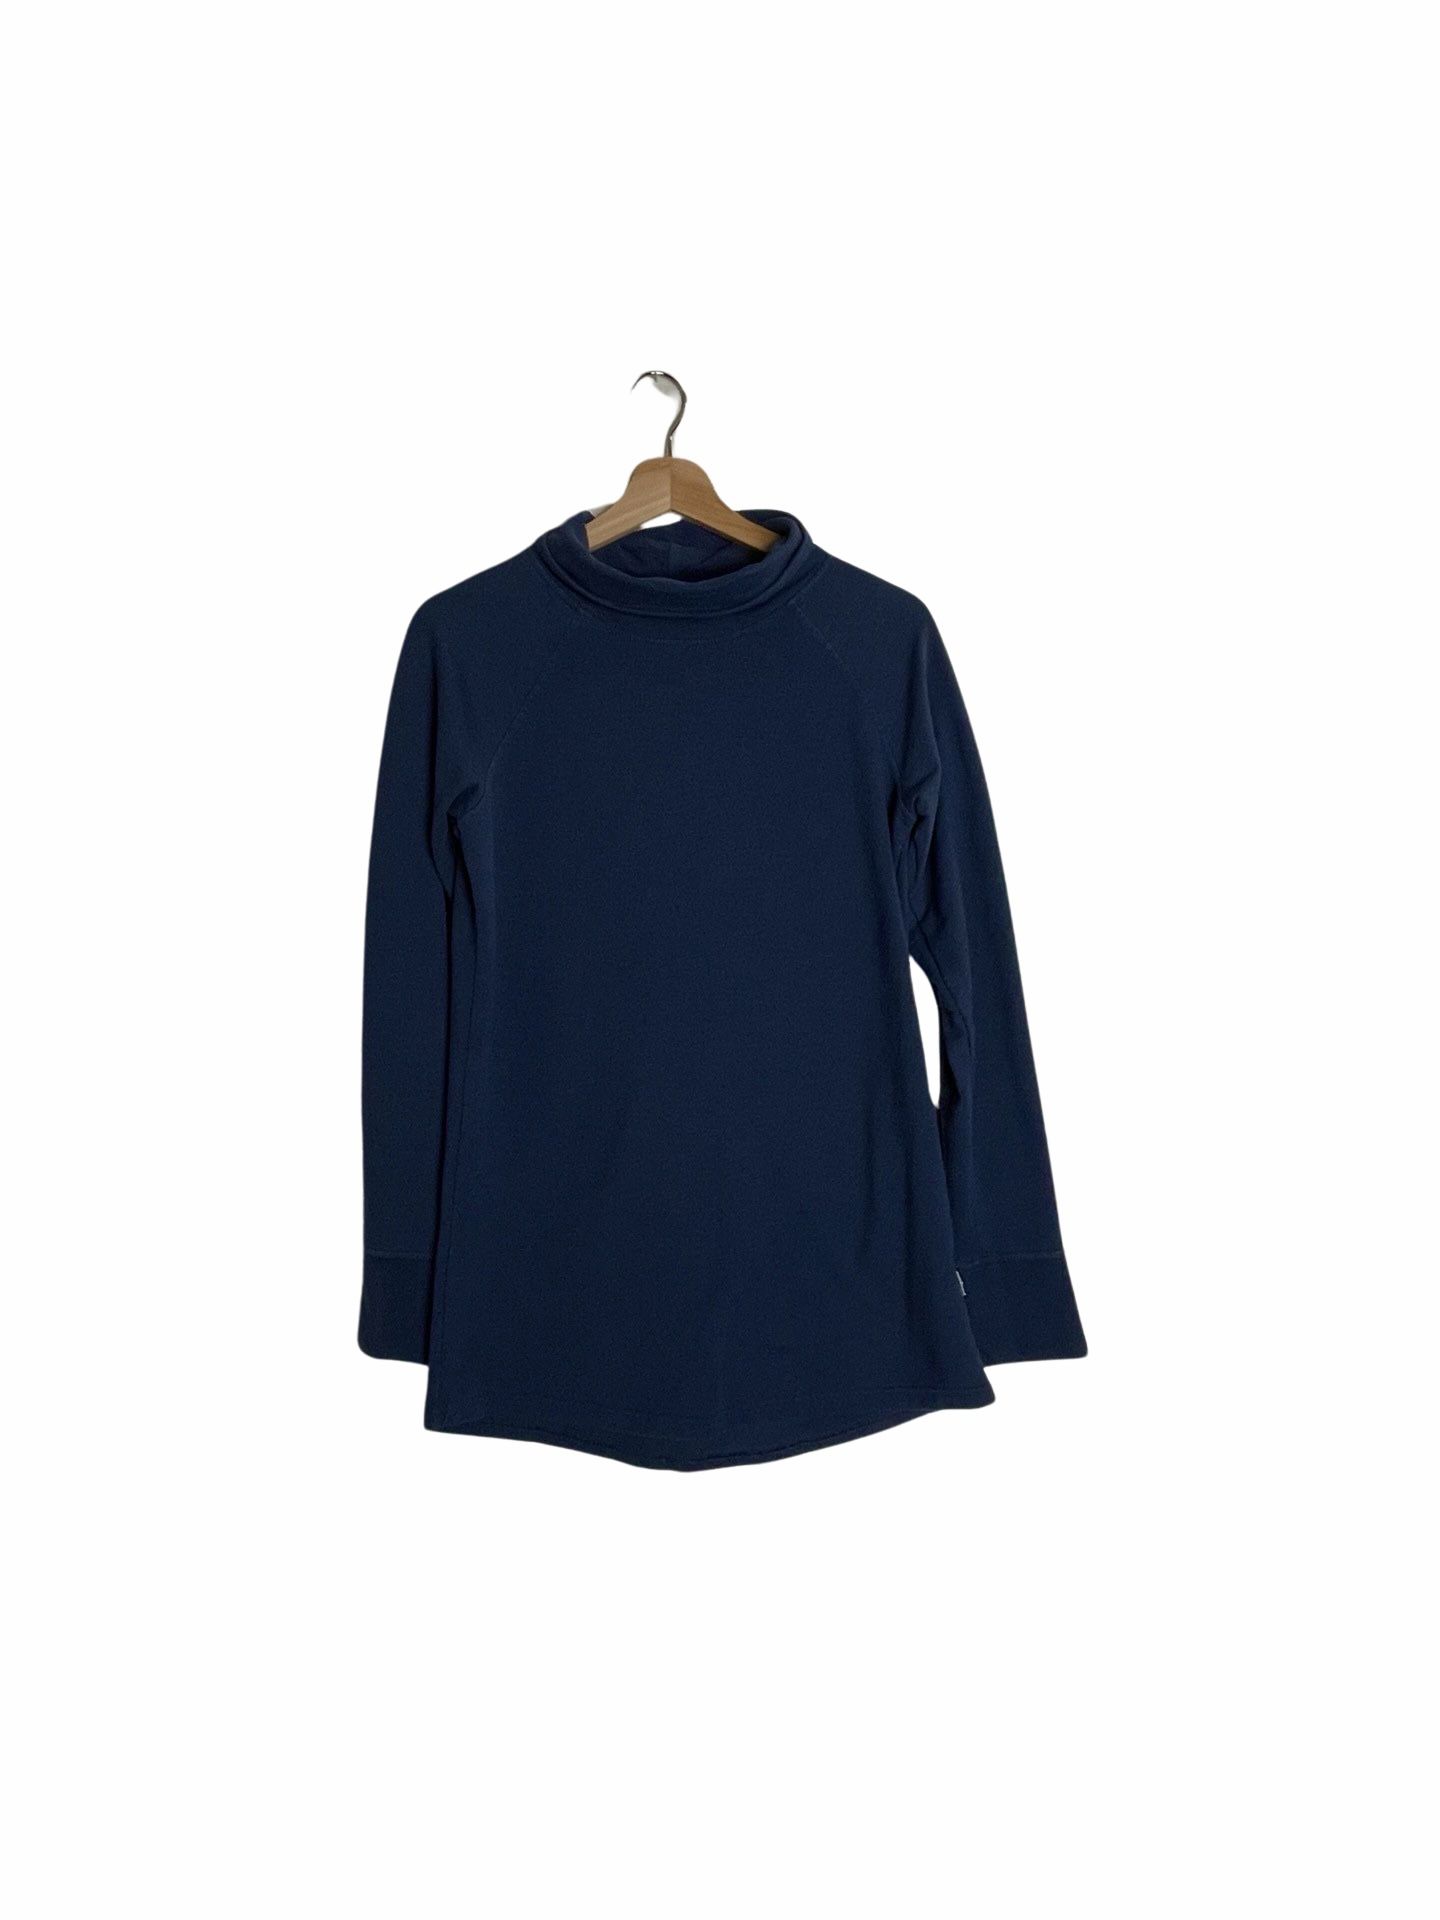 PATAGONIA Women’s Regenerative Organic Cotton Sweatshirt, Navy Blue, Small